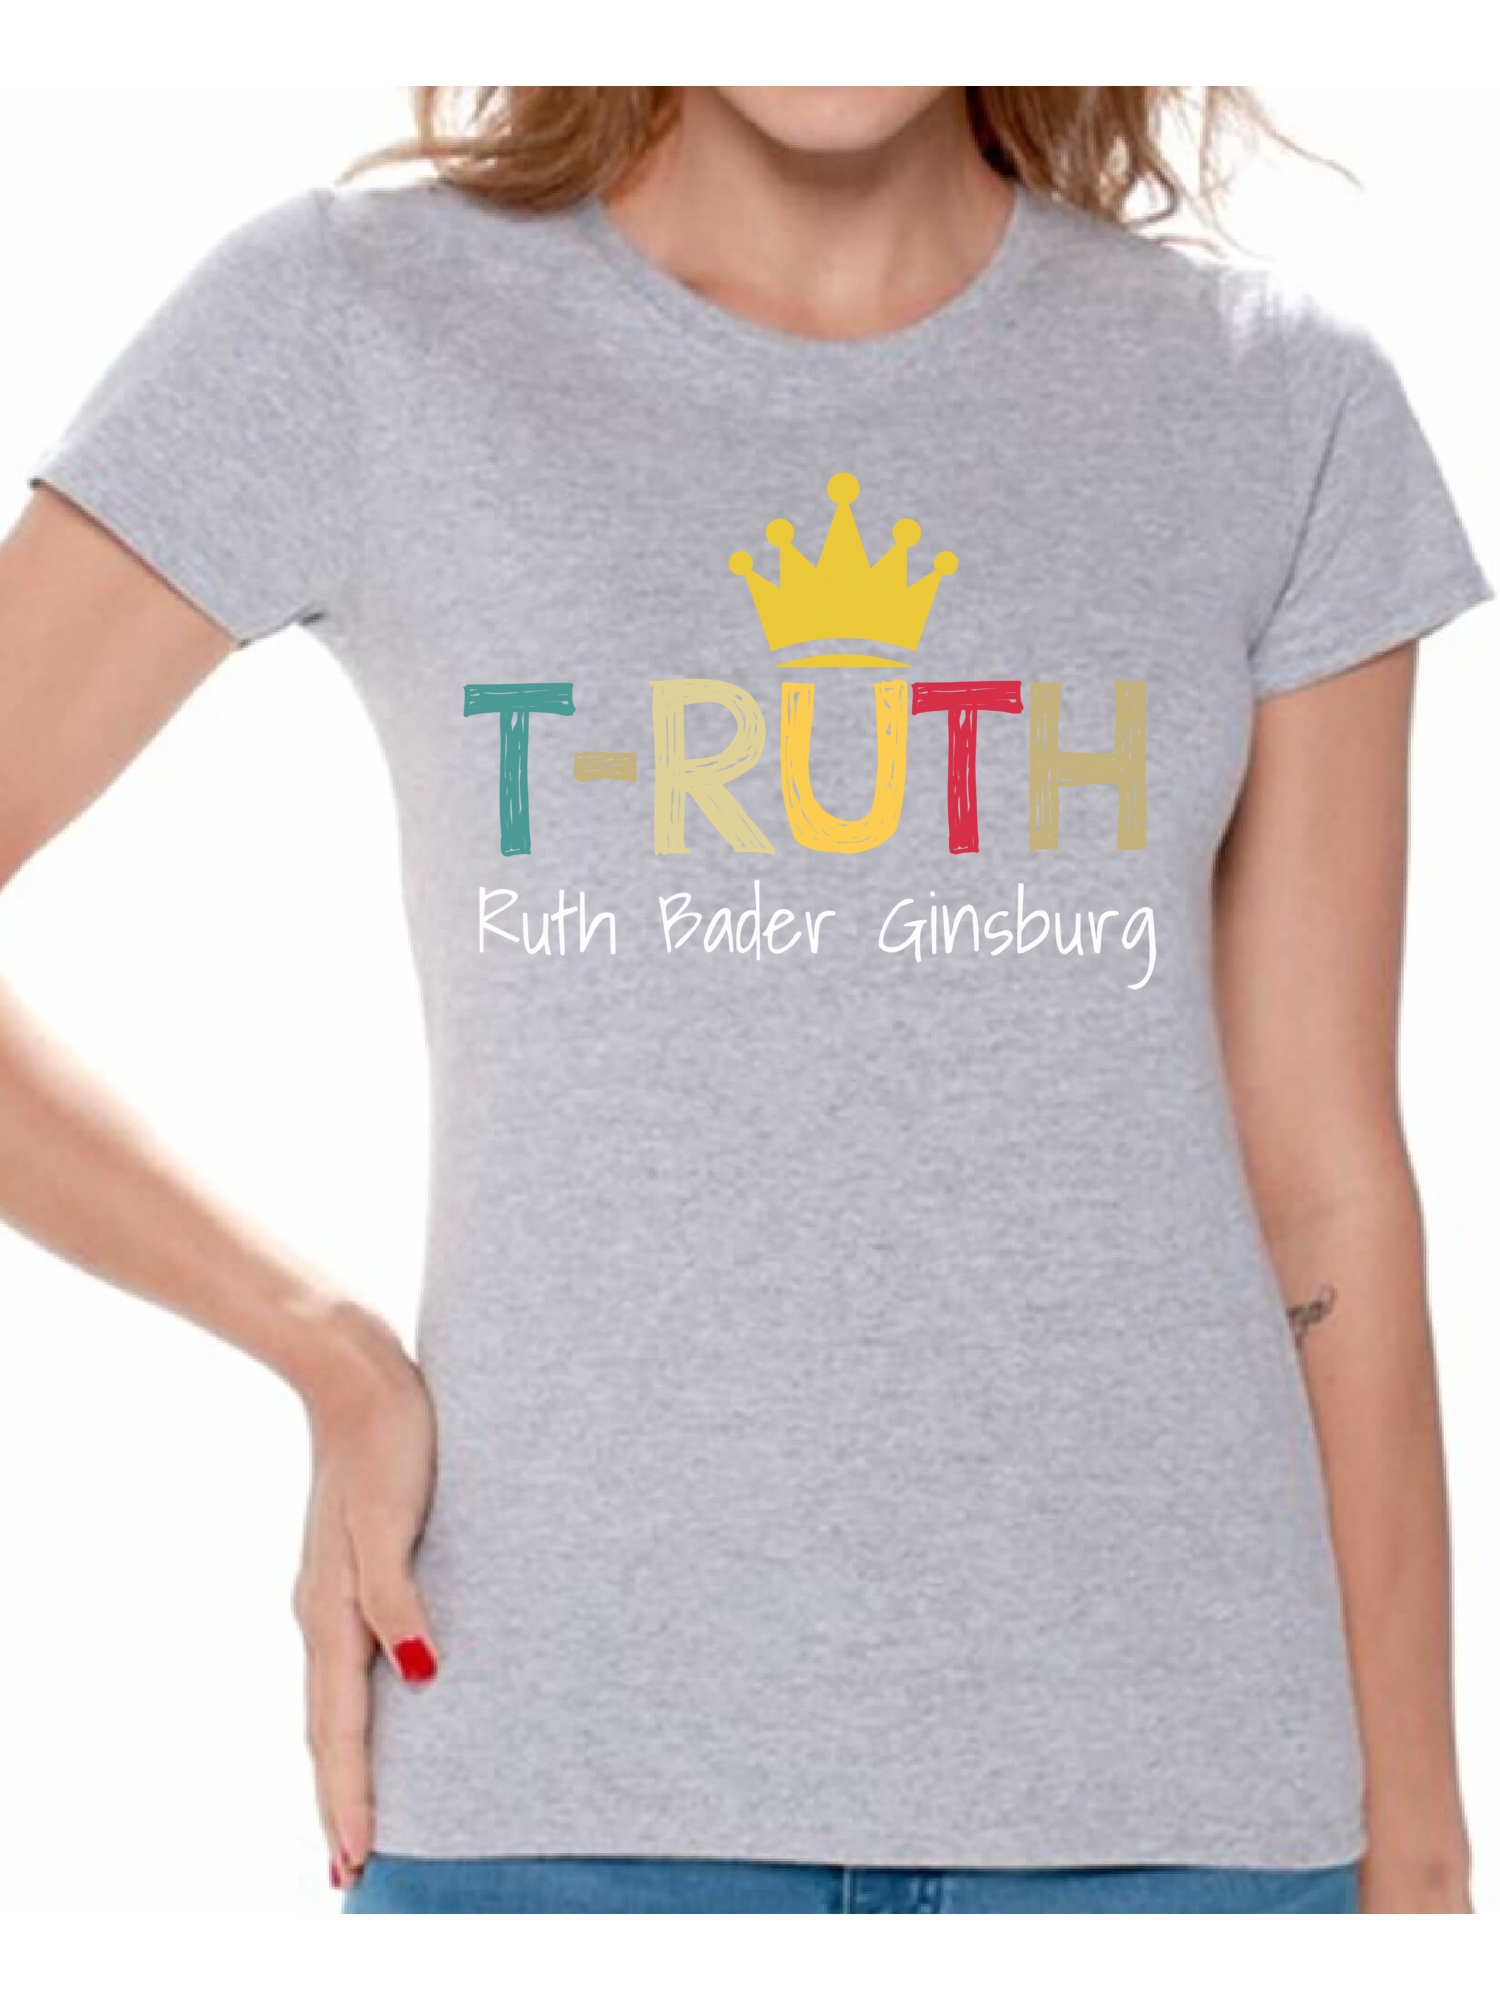 Awkward Styles Ruth Bader Ginsburg Shirt for Women T-RUTH Notorious Shirt RBG T Shirt Ladies Support Women Empowerment T-shirt - image 1 of 4